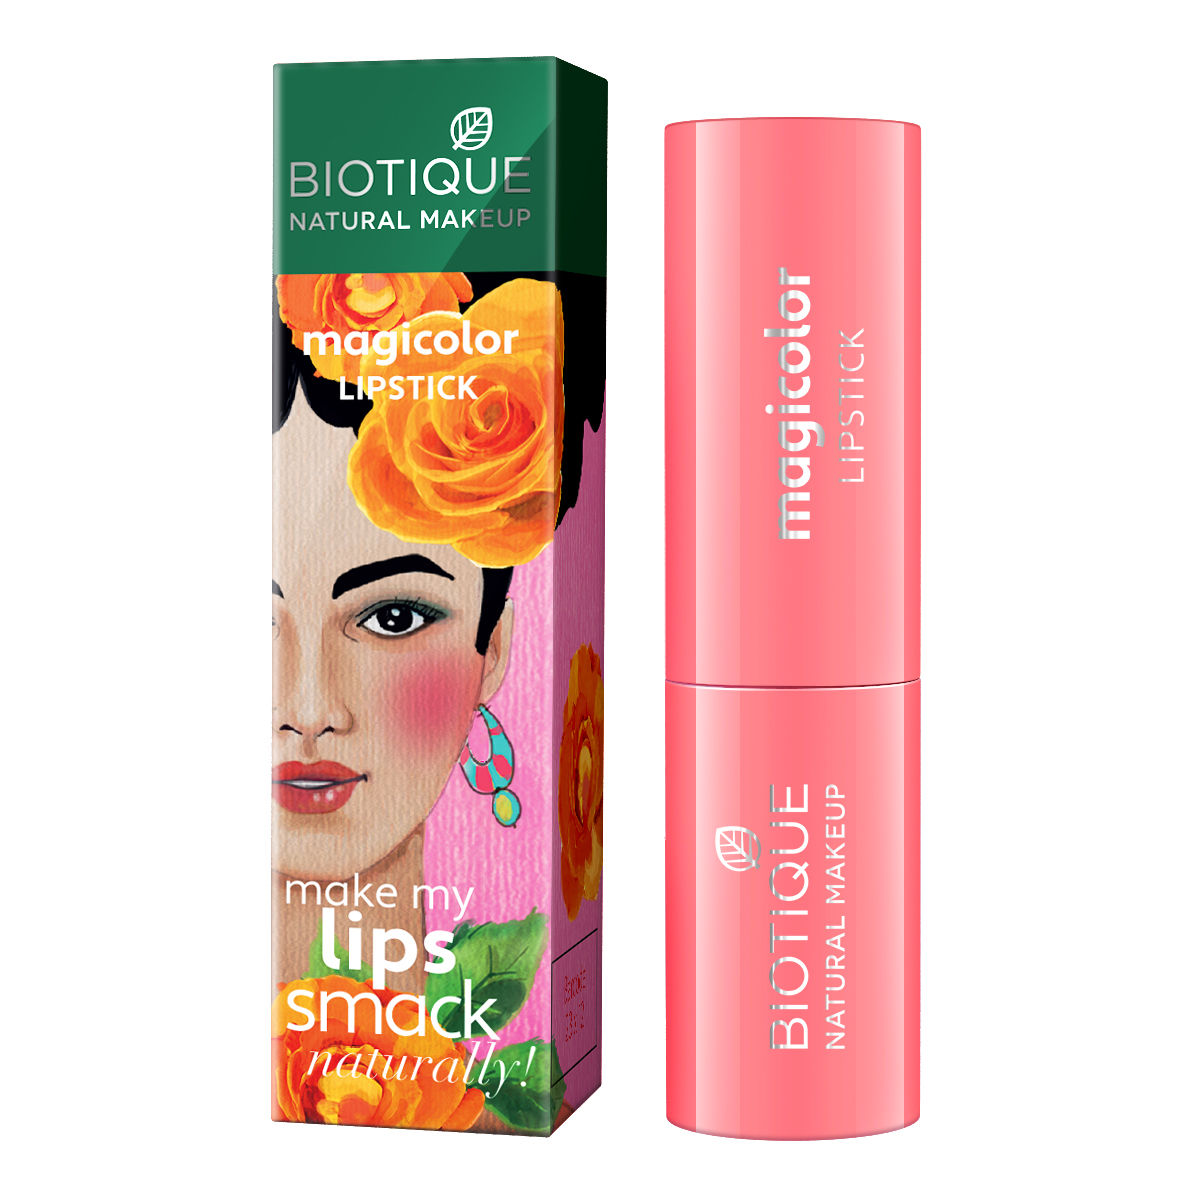 Buy Biotique Natural Makeup Magicolor Lipstick (Cookie Crumble)(4.2 g) - Purplle